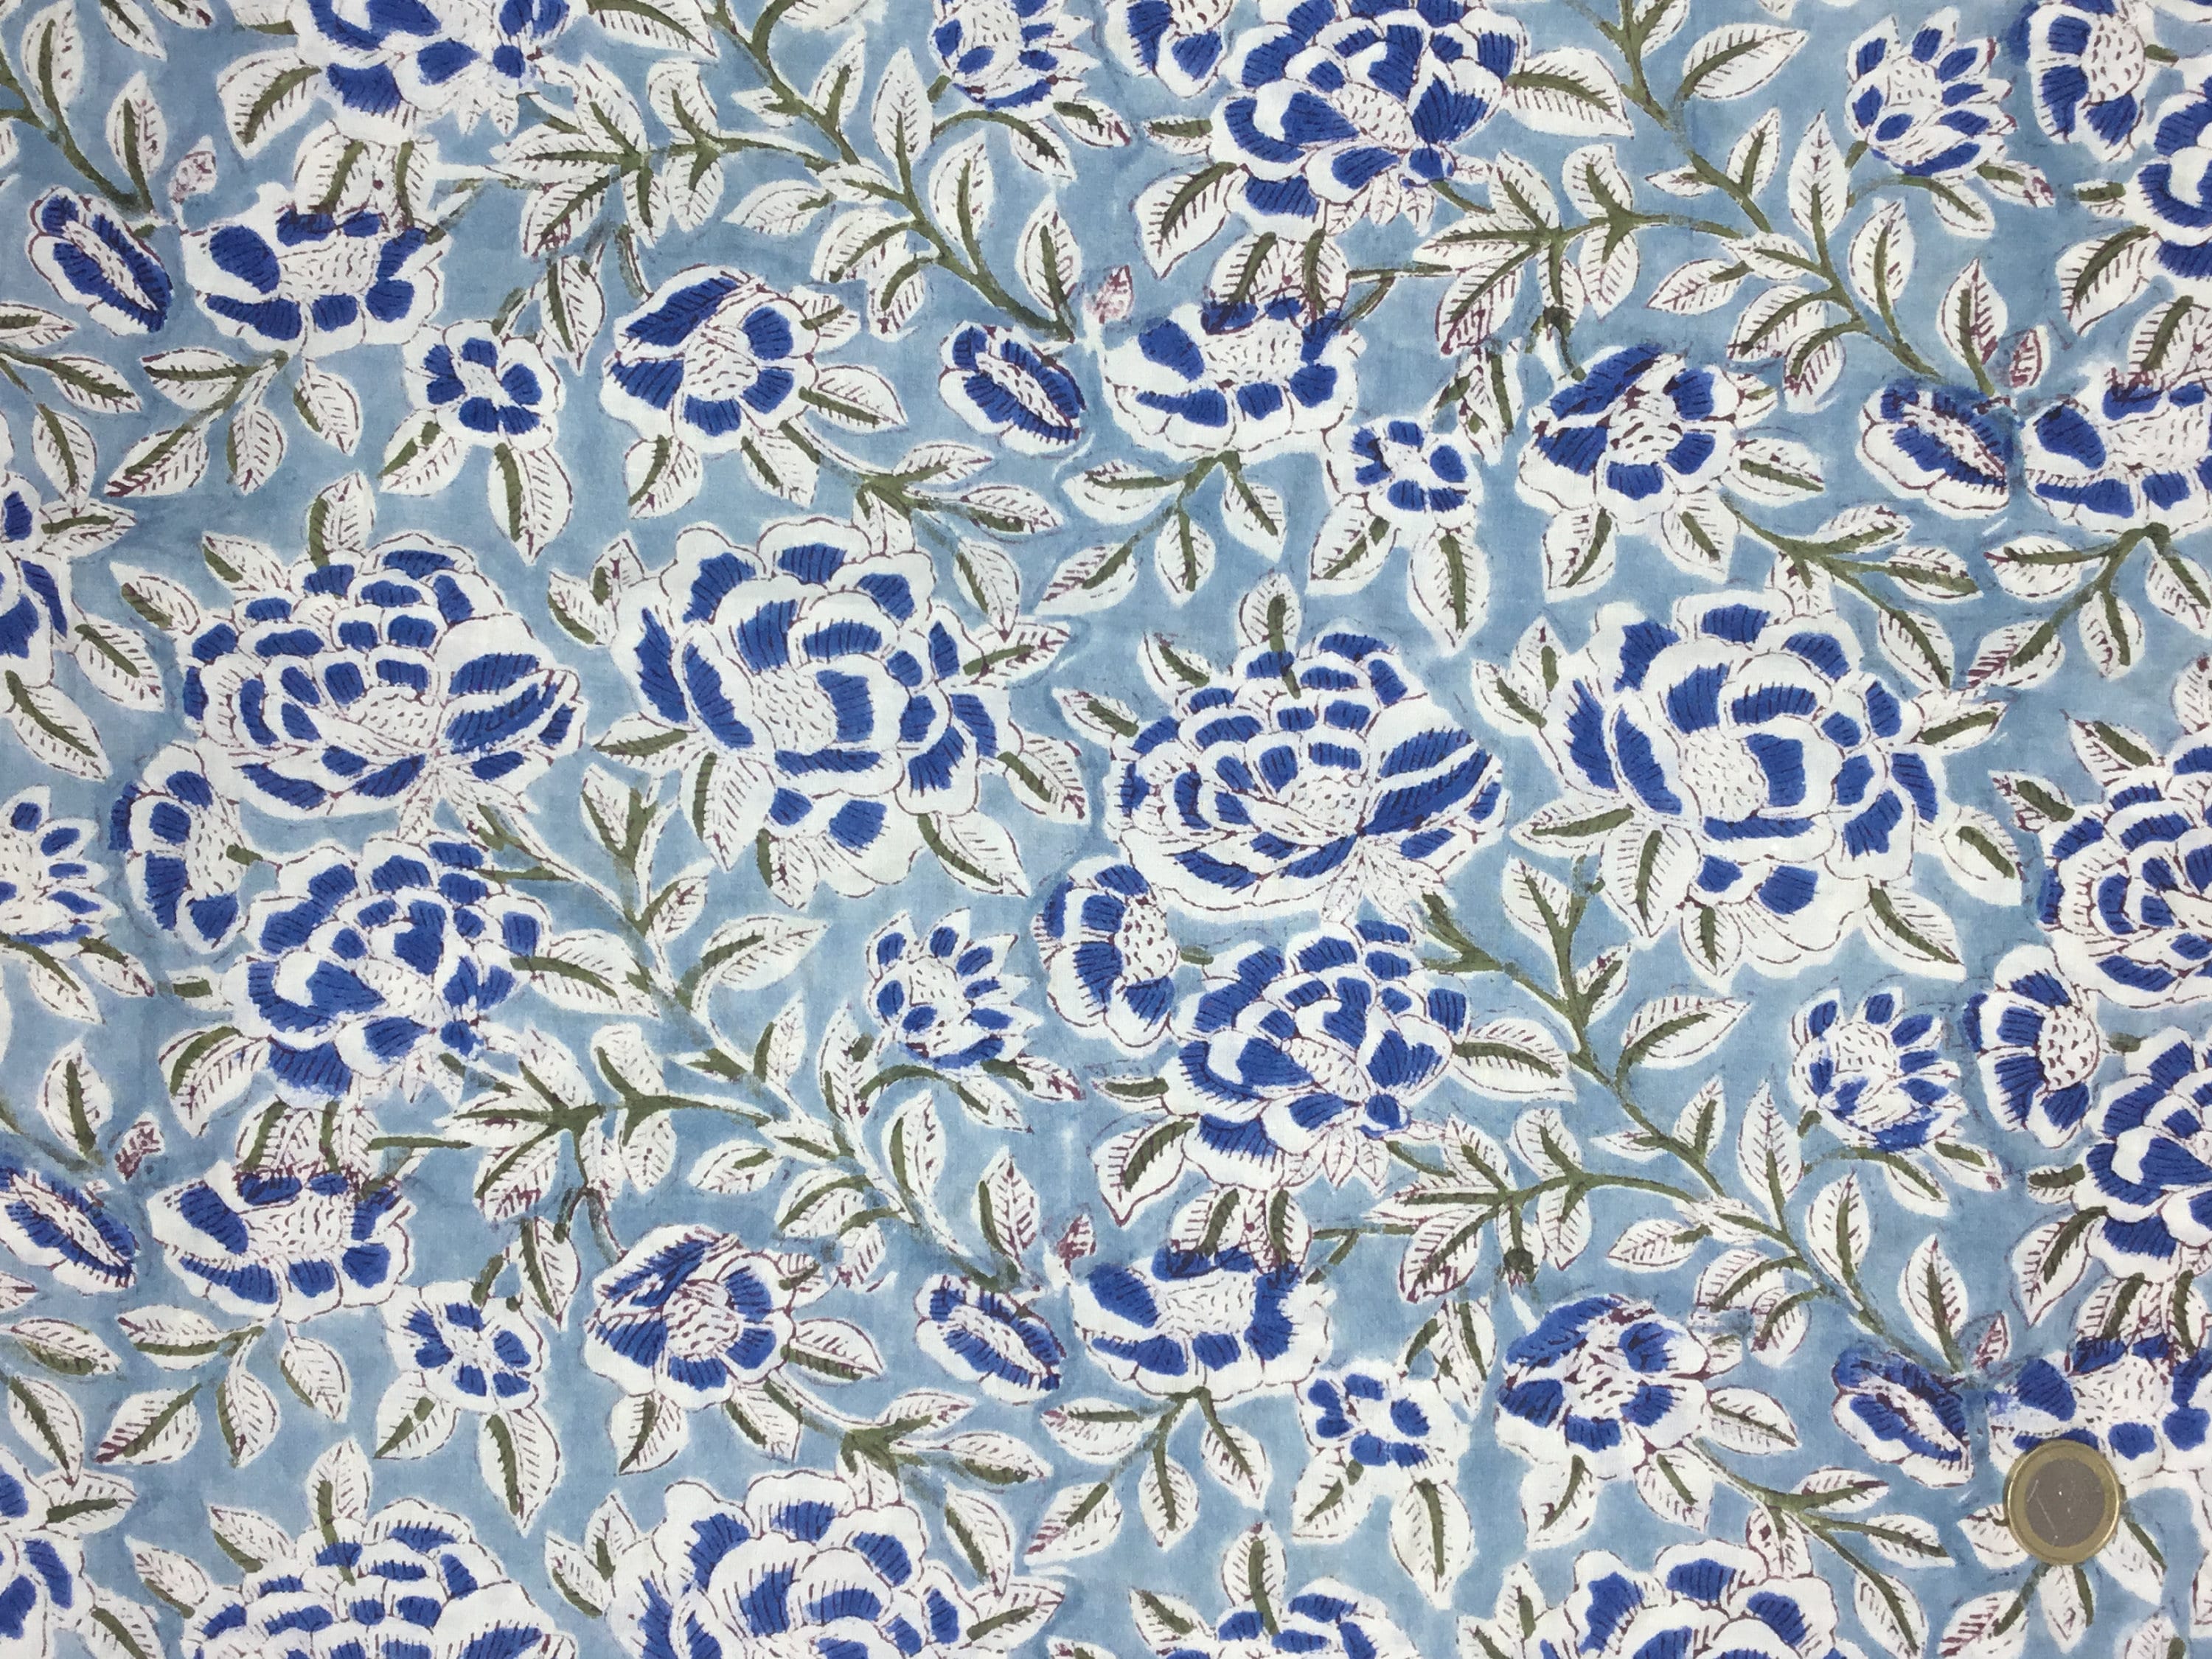 Indian block printed cotton muslin, made. Blue. Jaipur block print